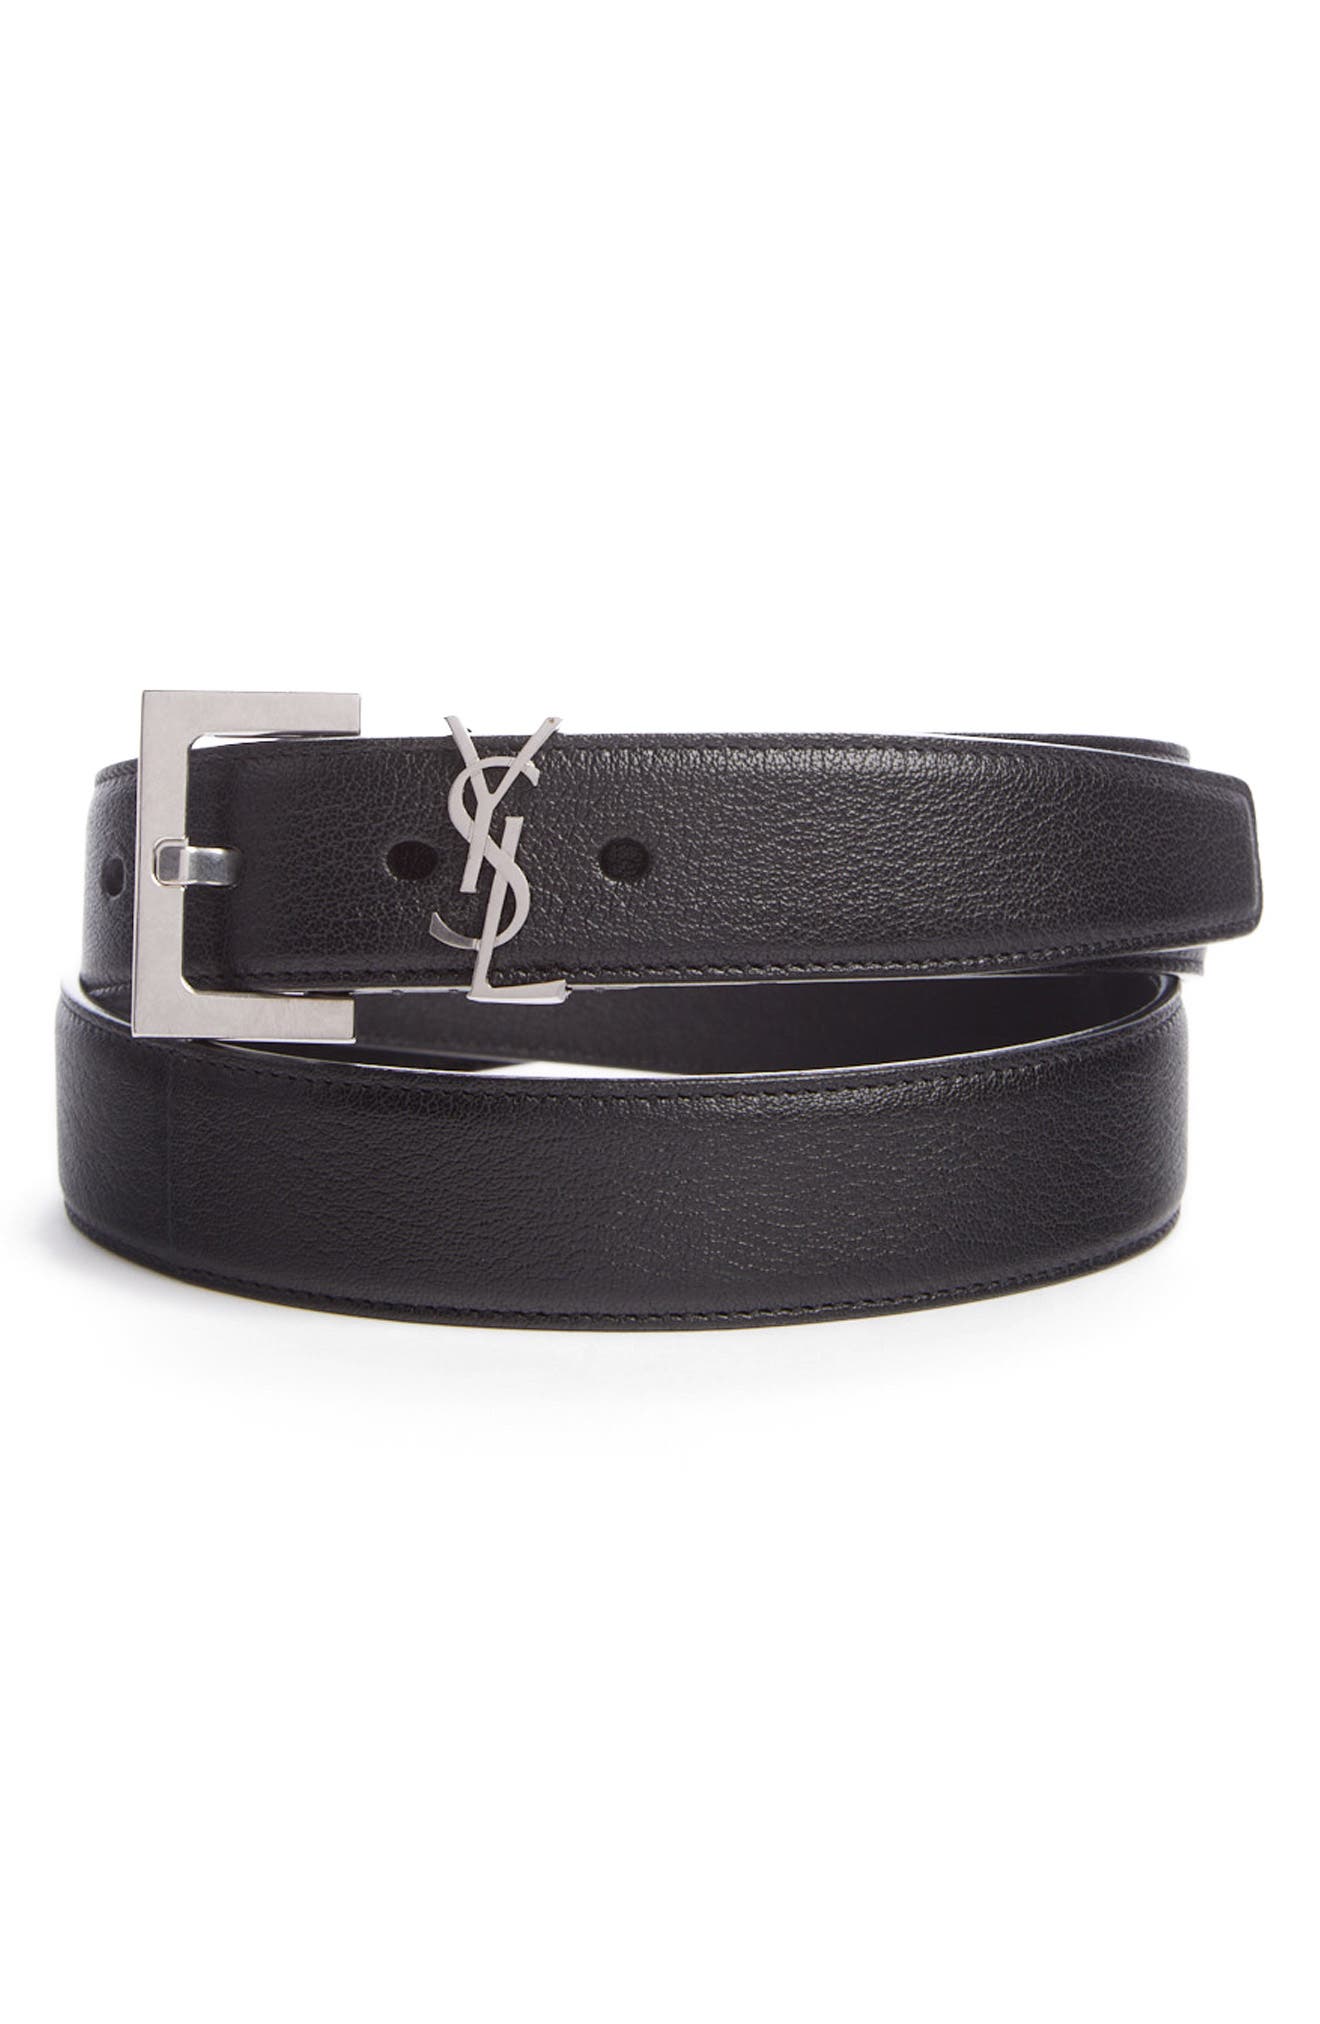 Saint Laurent Monogram belt - Black